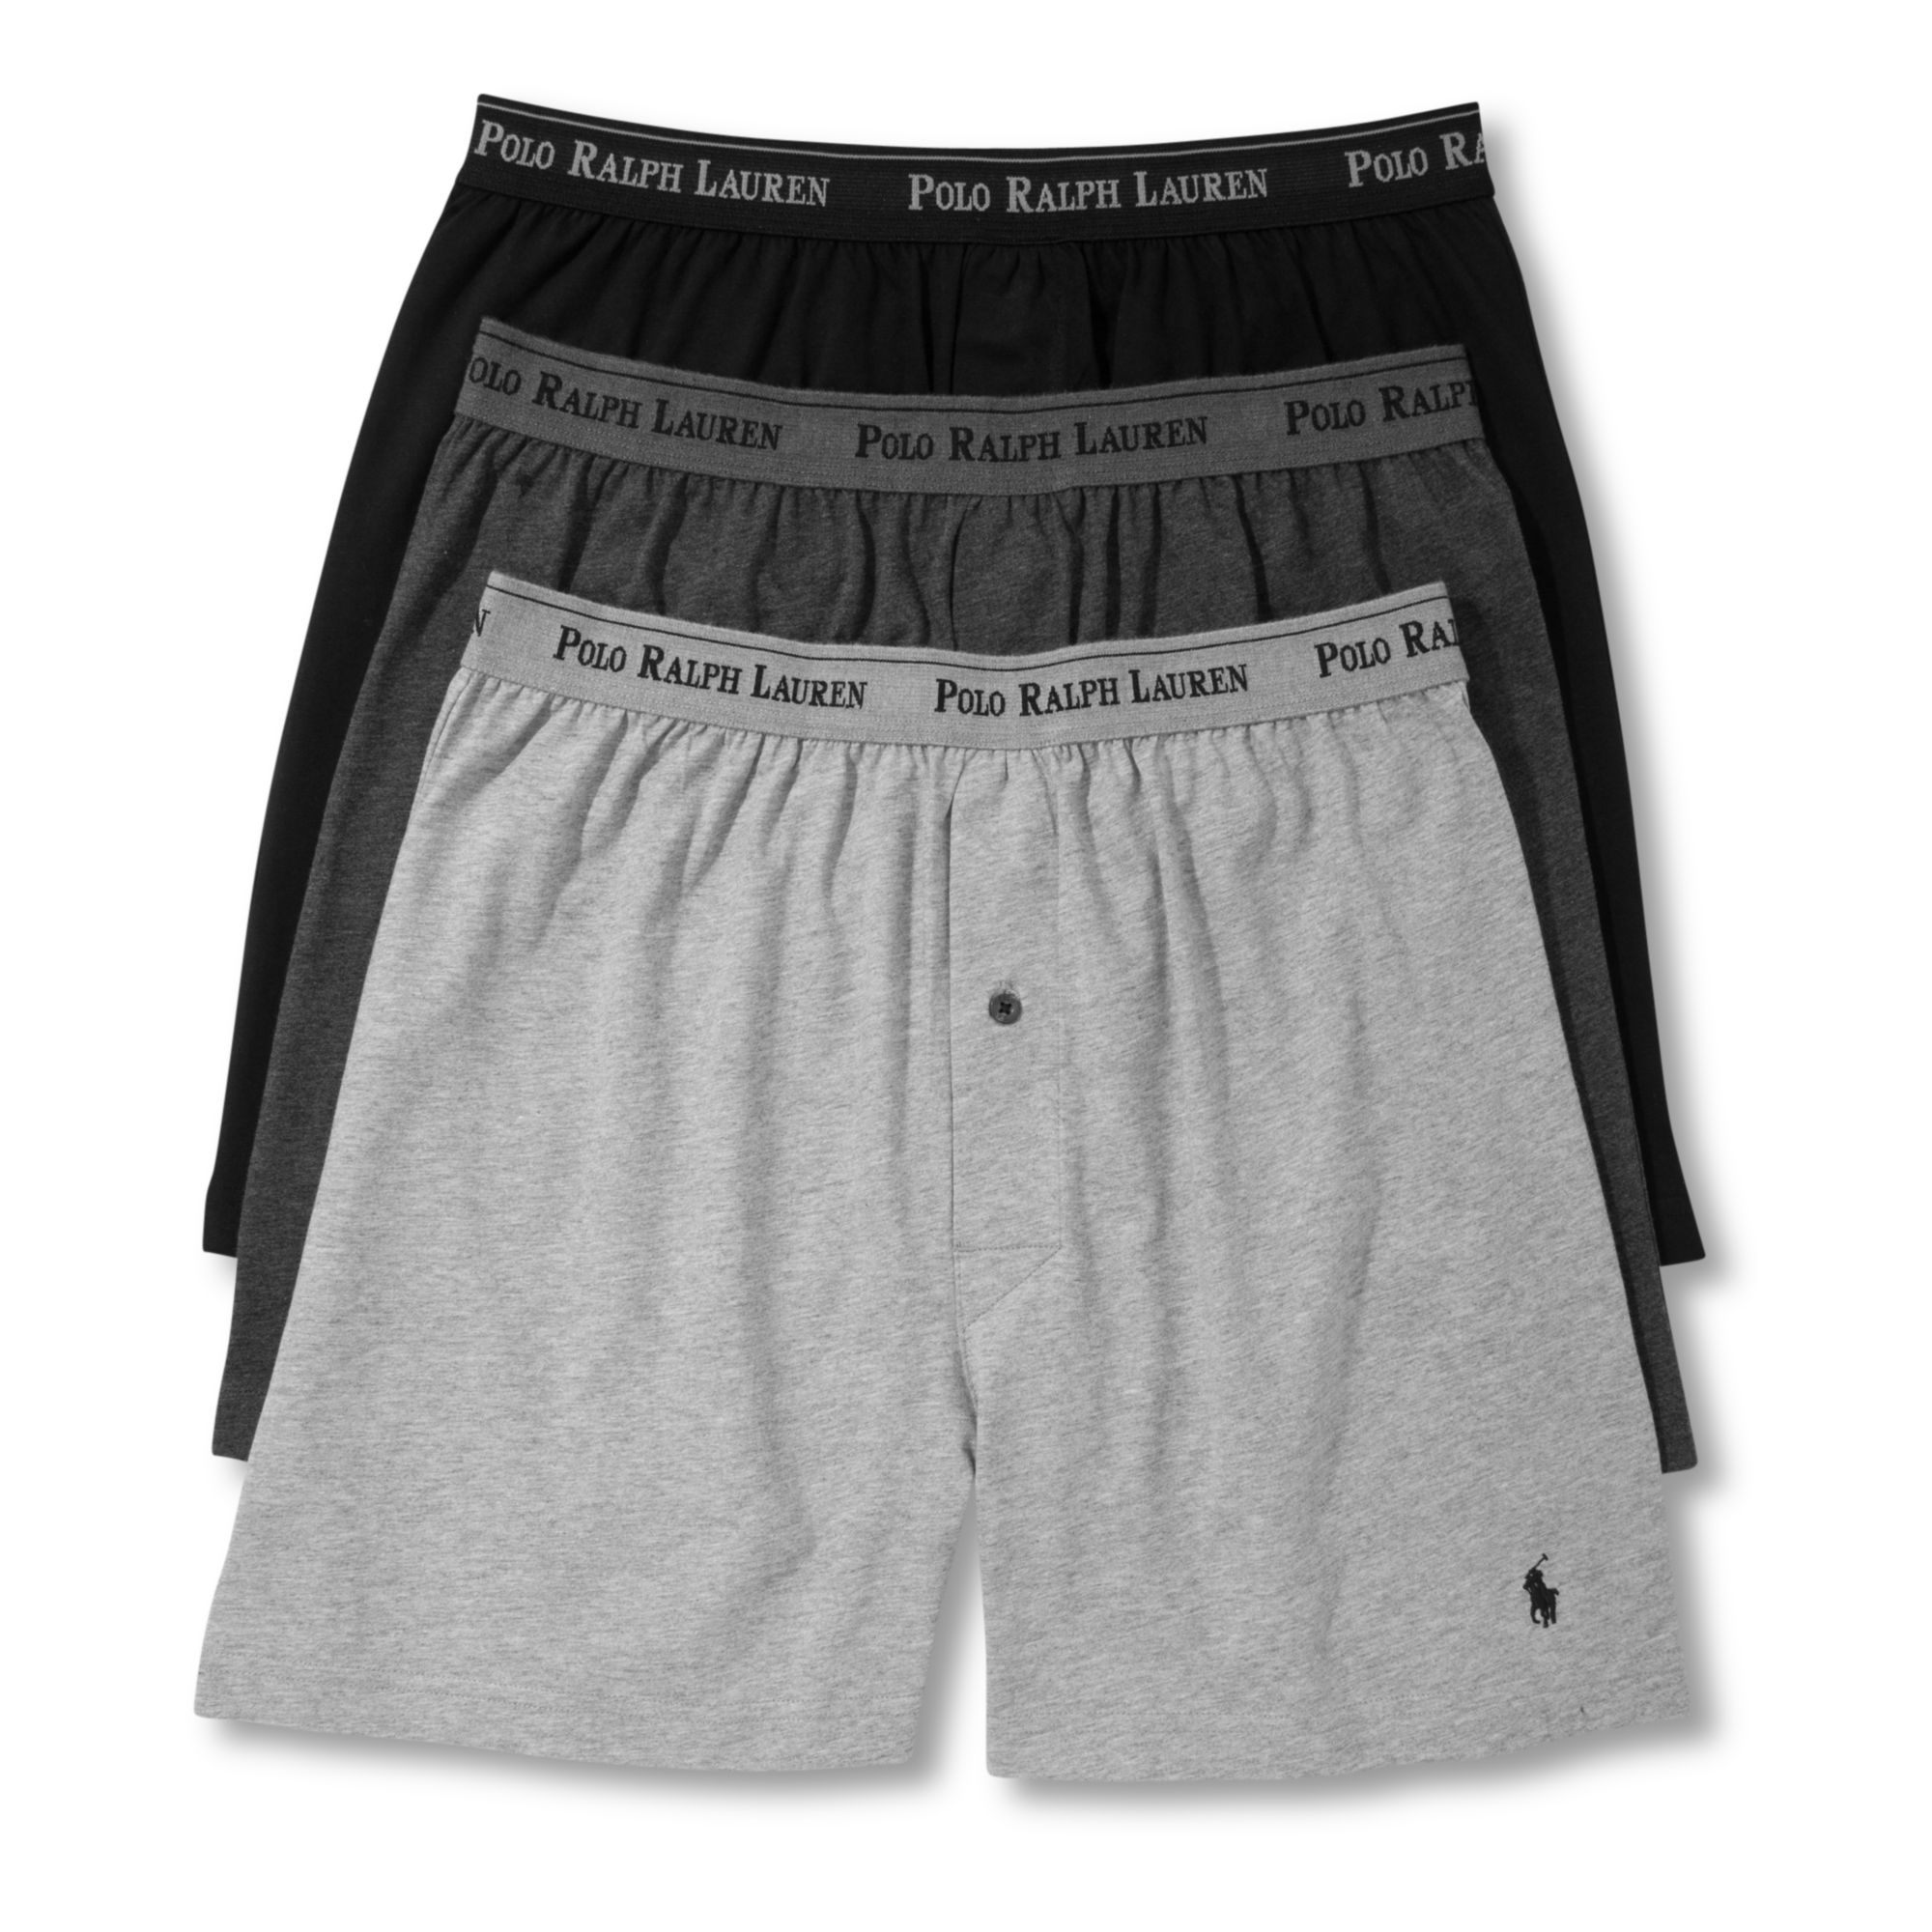 Polo ralph lauren Men's Underwear, Classic Knit Boxer 3 Pack in ...